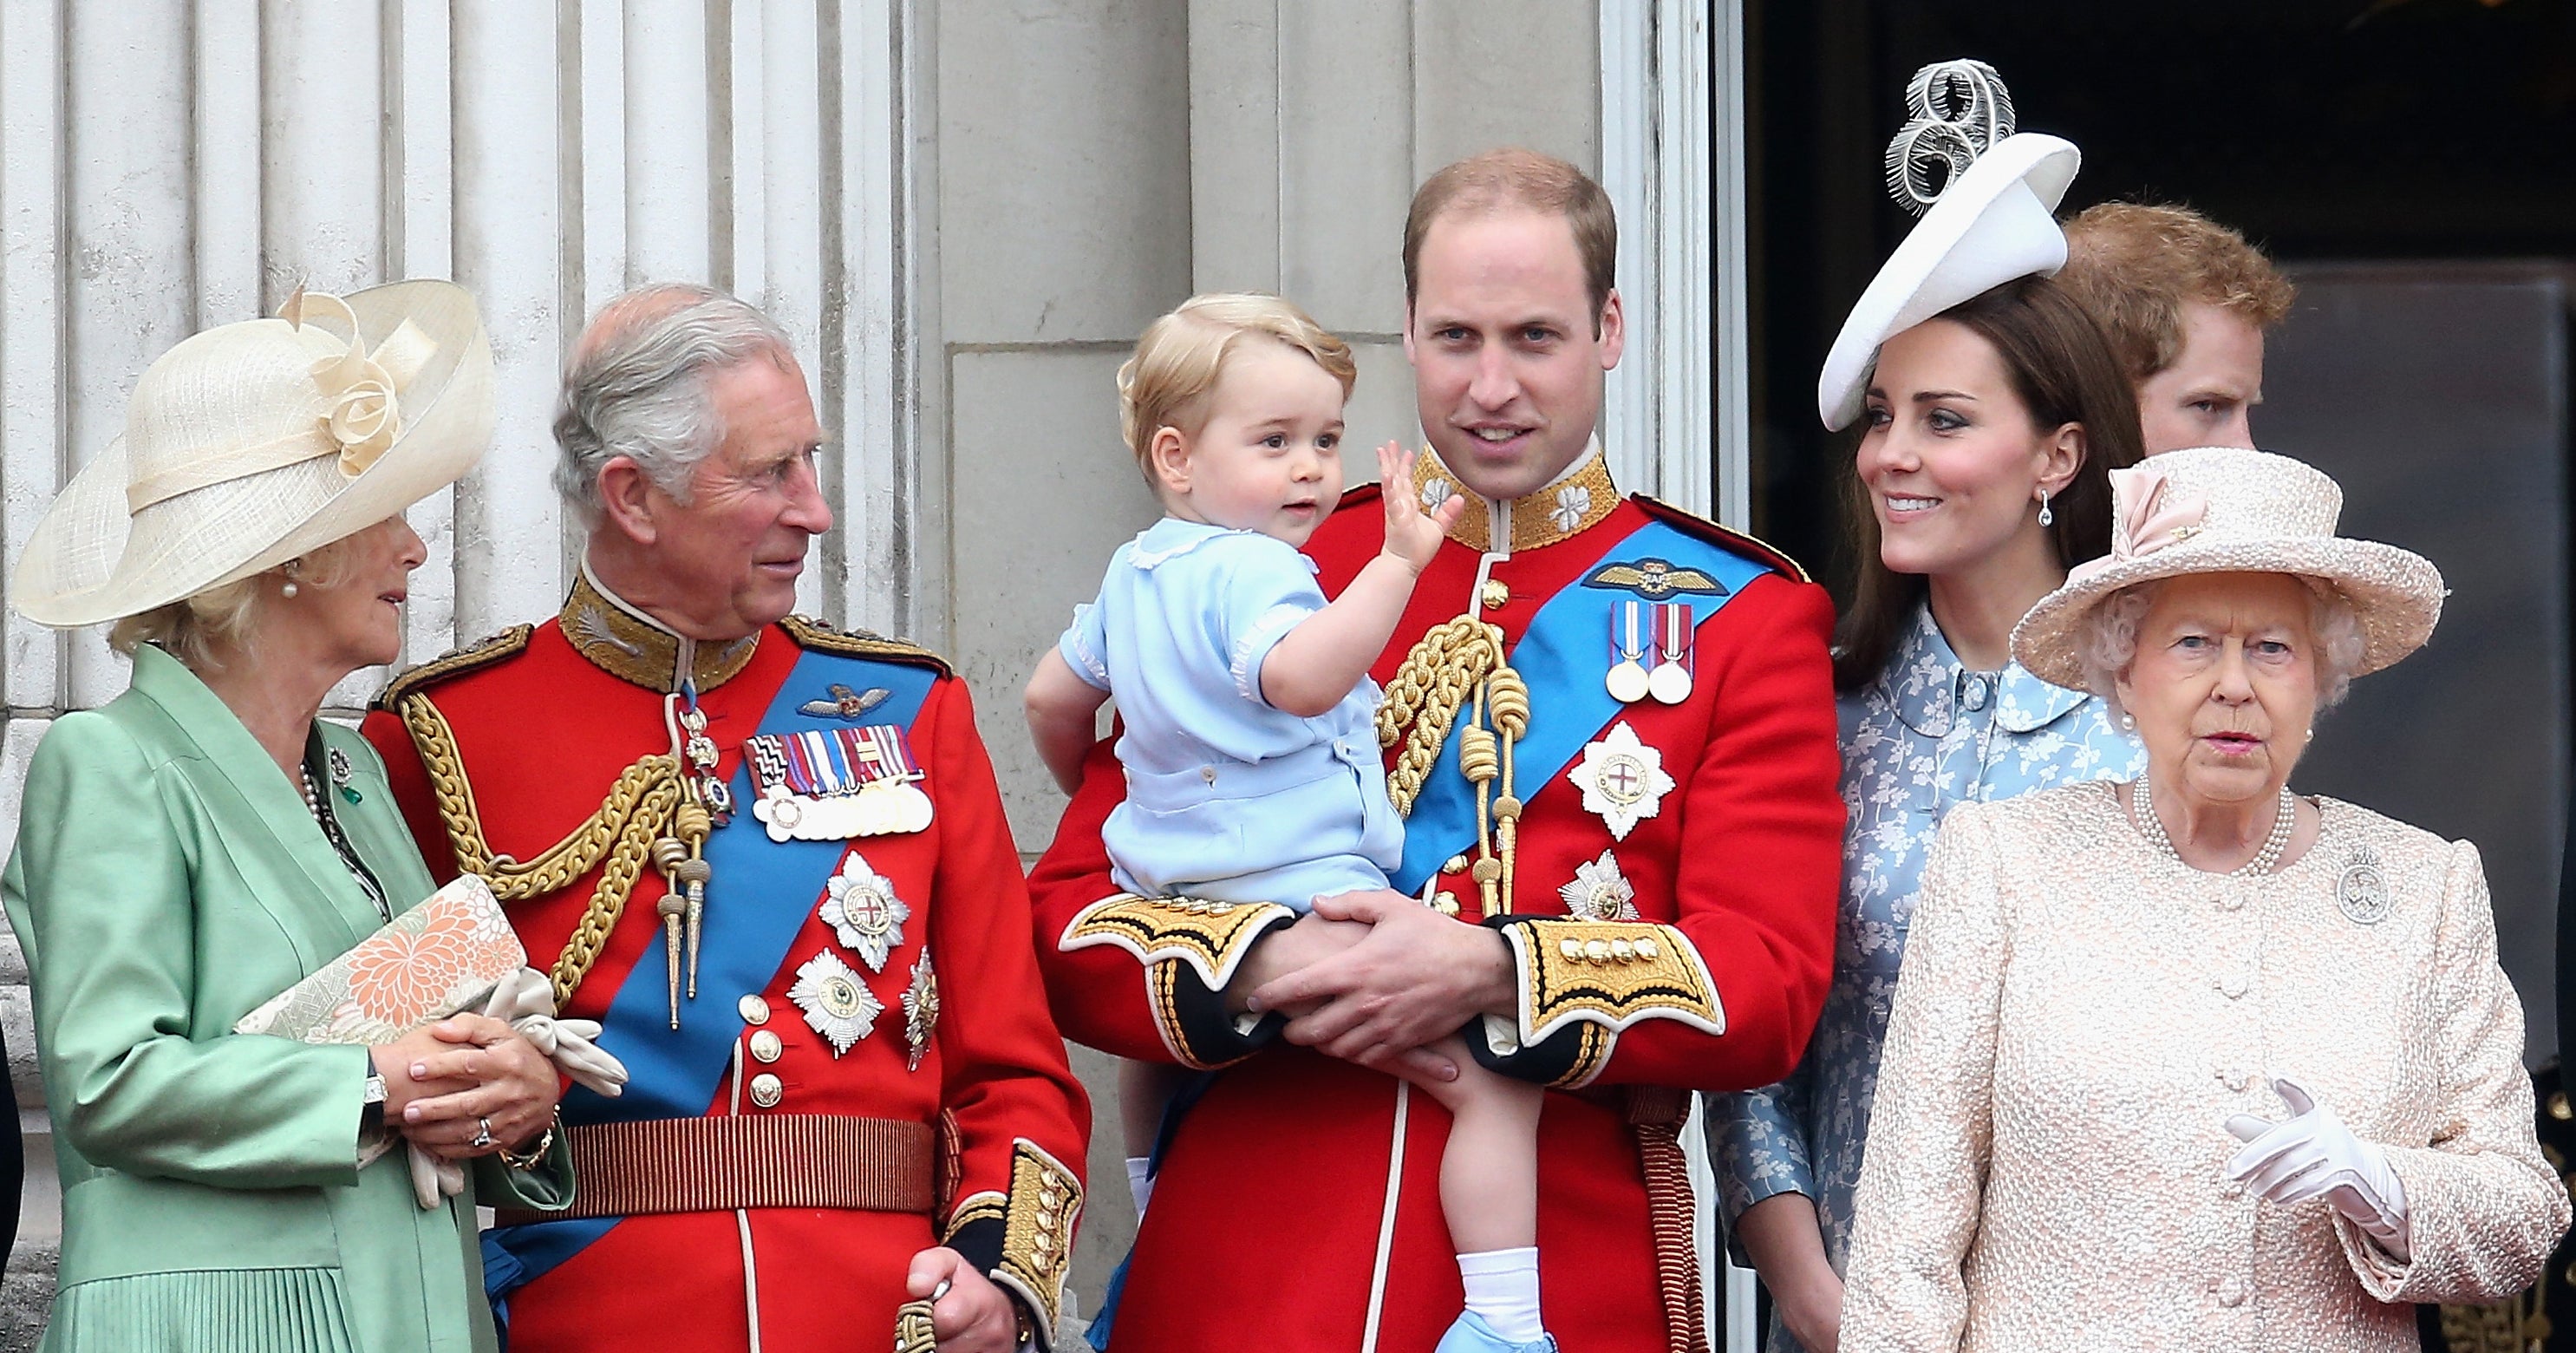 GLOBE: The British Royal Family Broke - Queen Elizabeth 